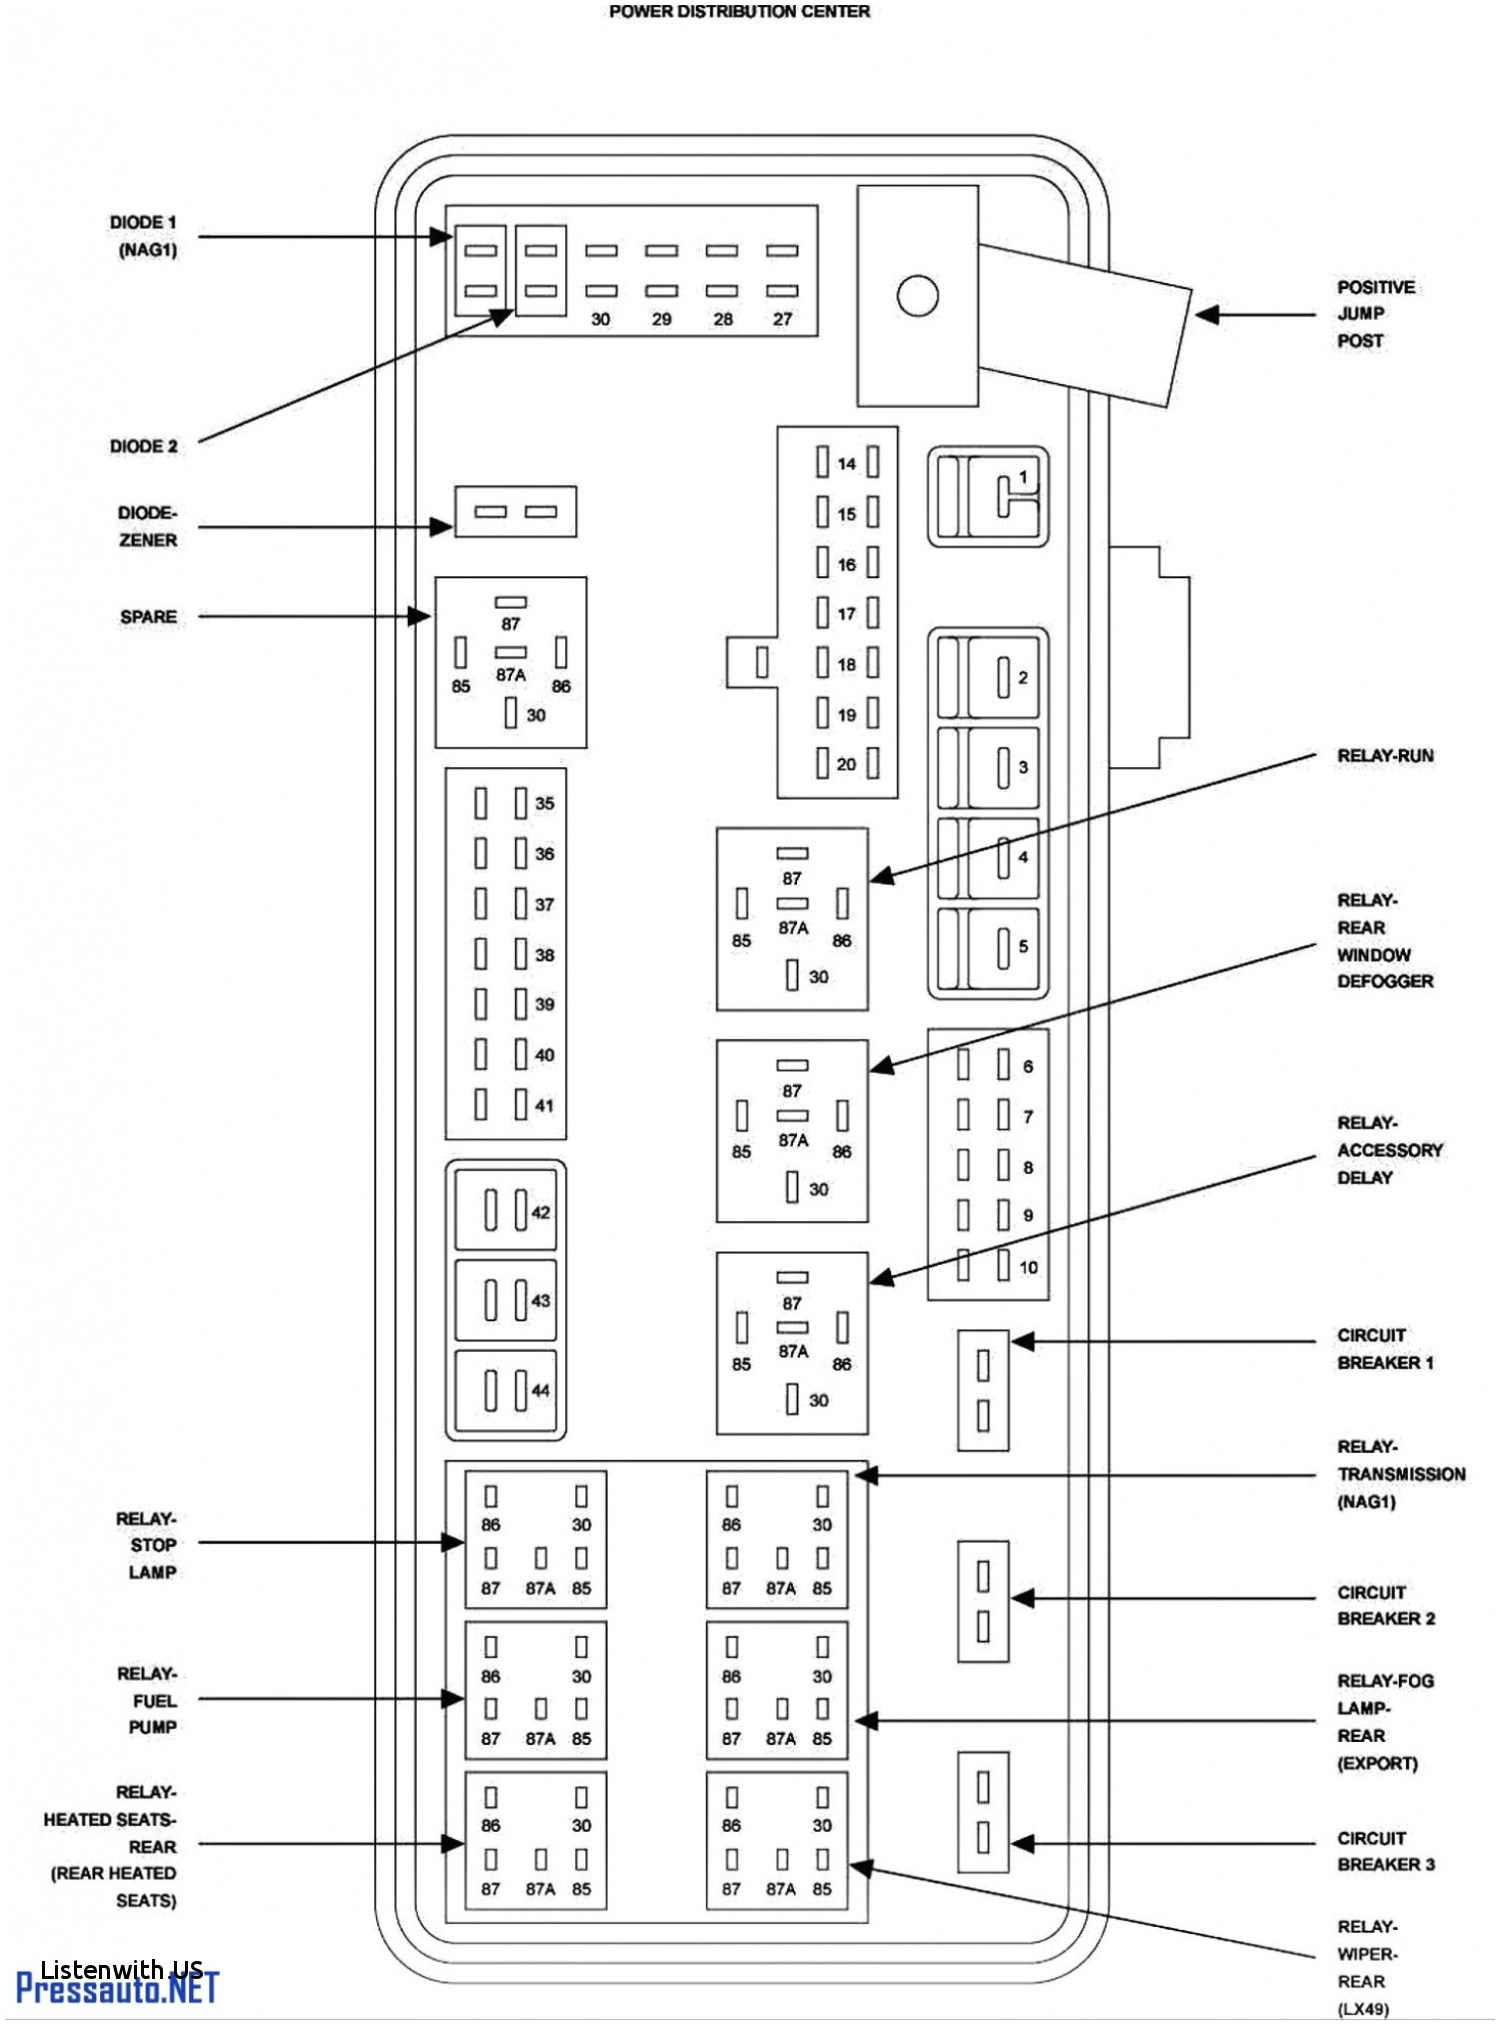 factory car stereo diagrams wiring diagram database http wikidiyfaqorguk images 0 0d splanwiringgif